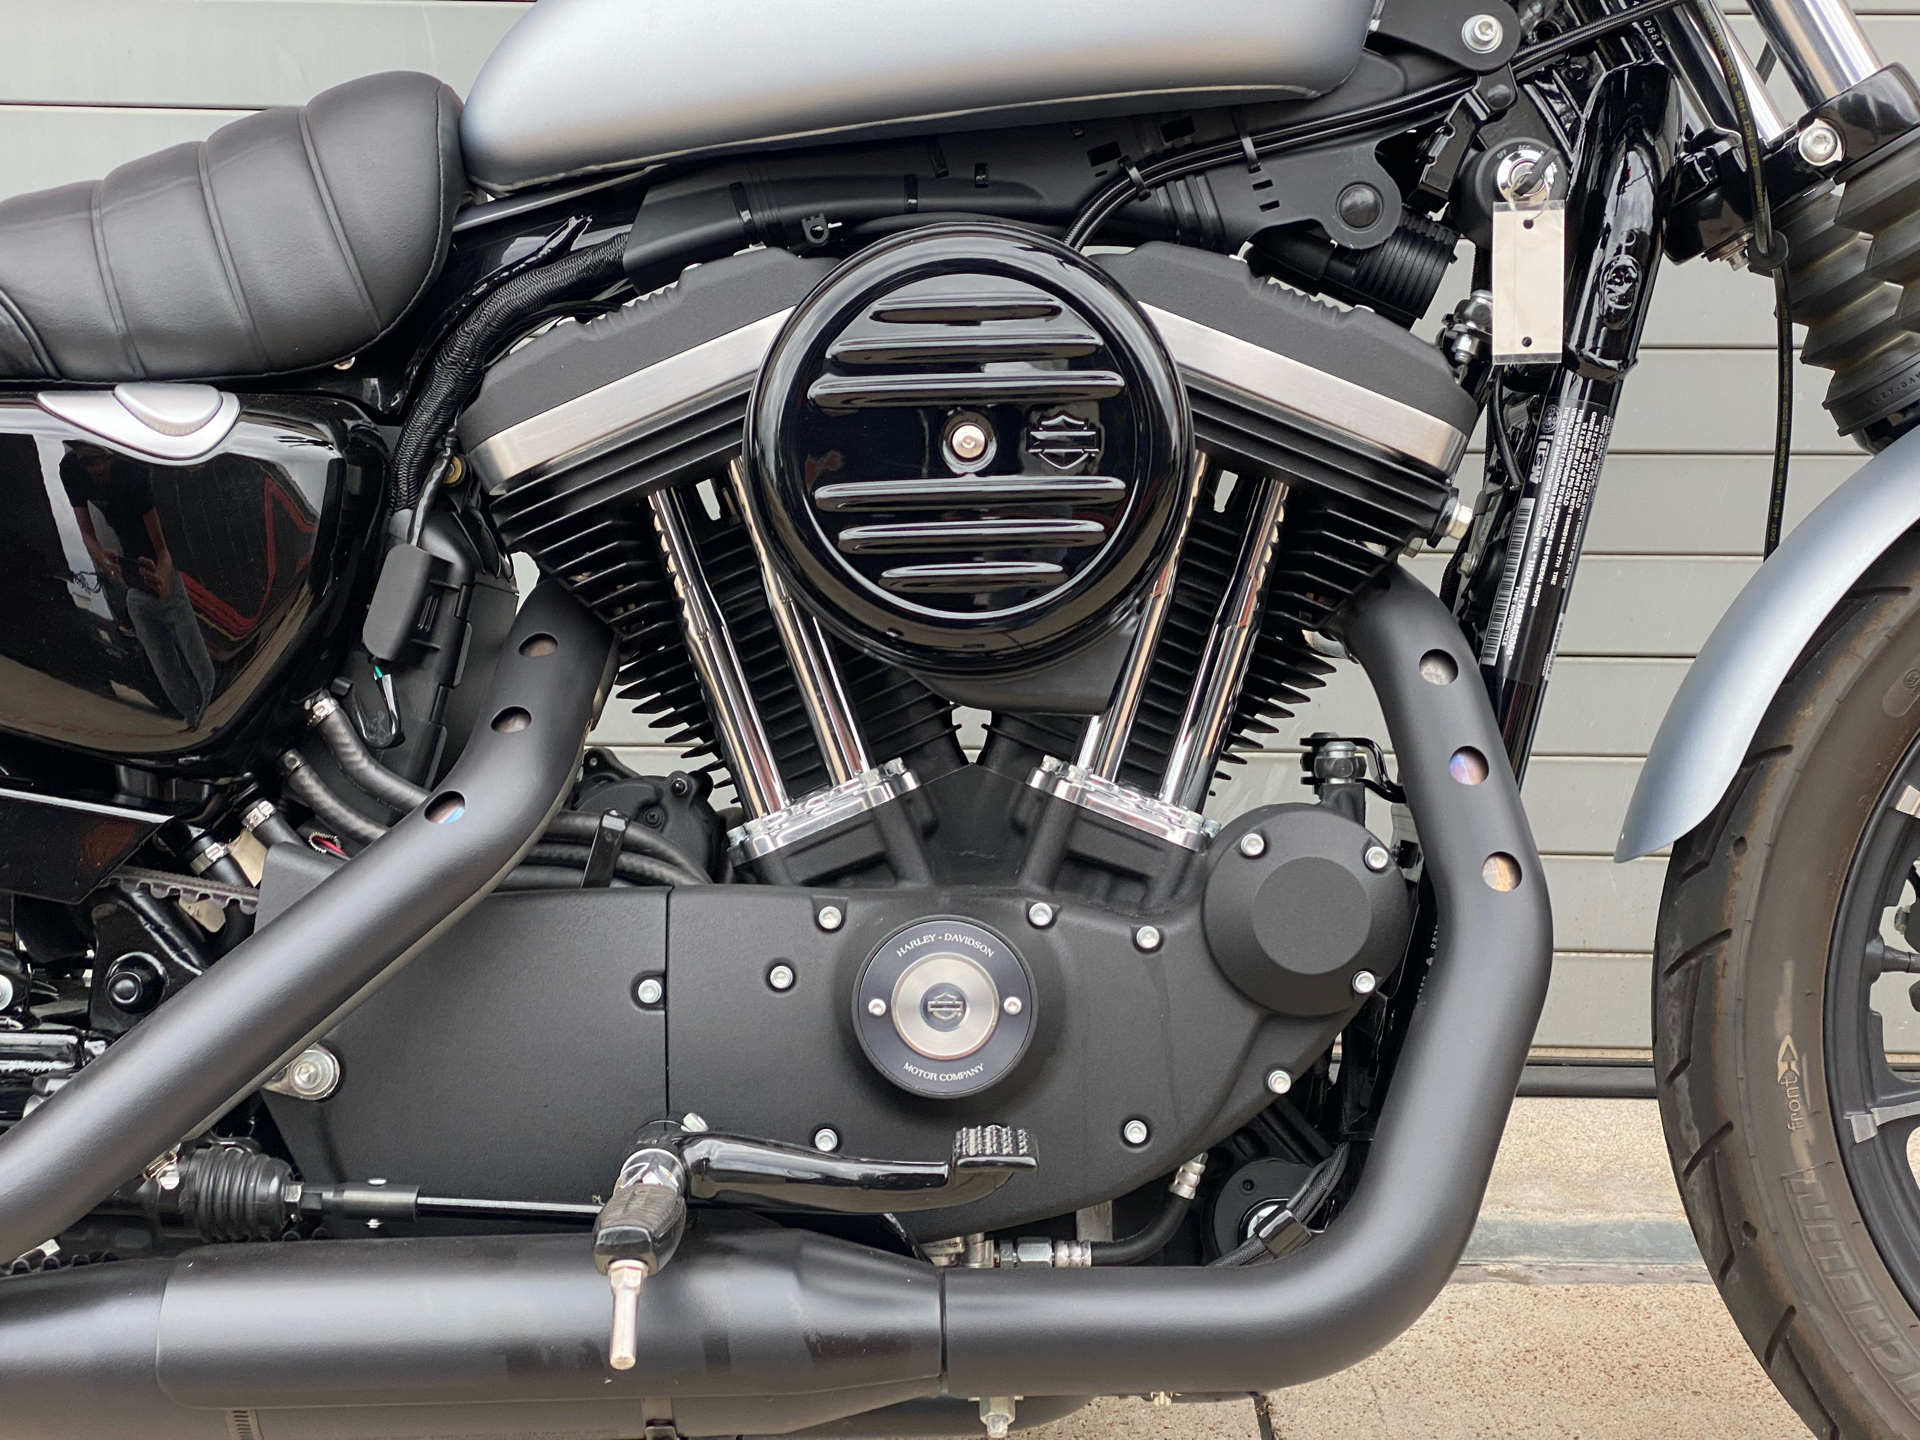 2021 Harley-Davidson Iron 883™ in Grand Prairie, Texas - Photo 6